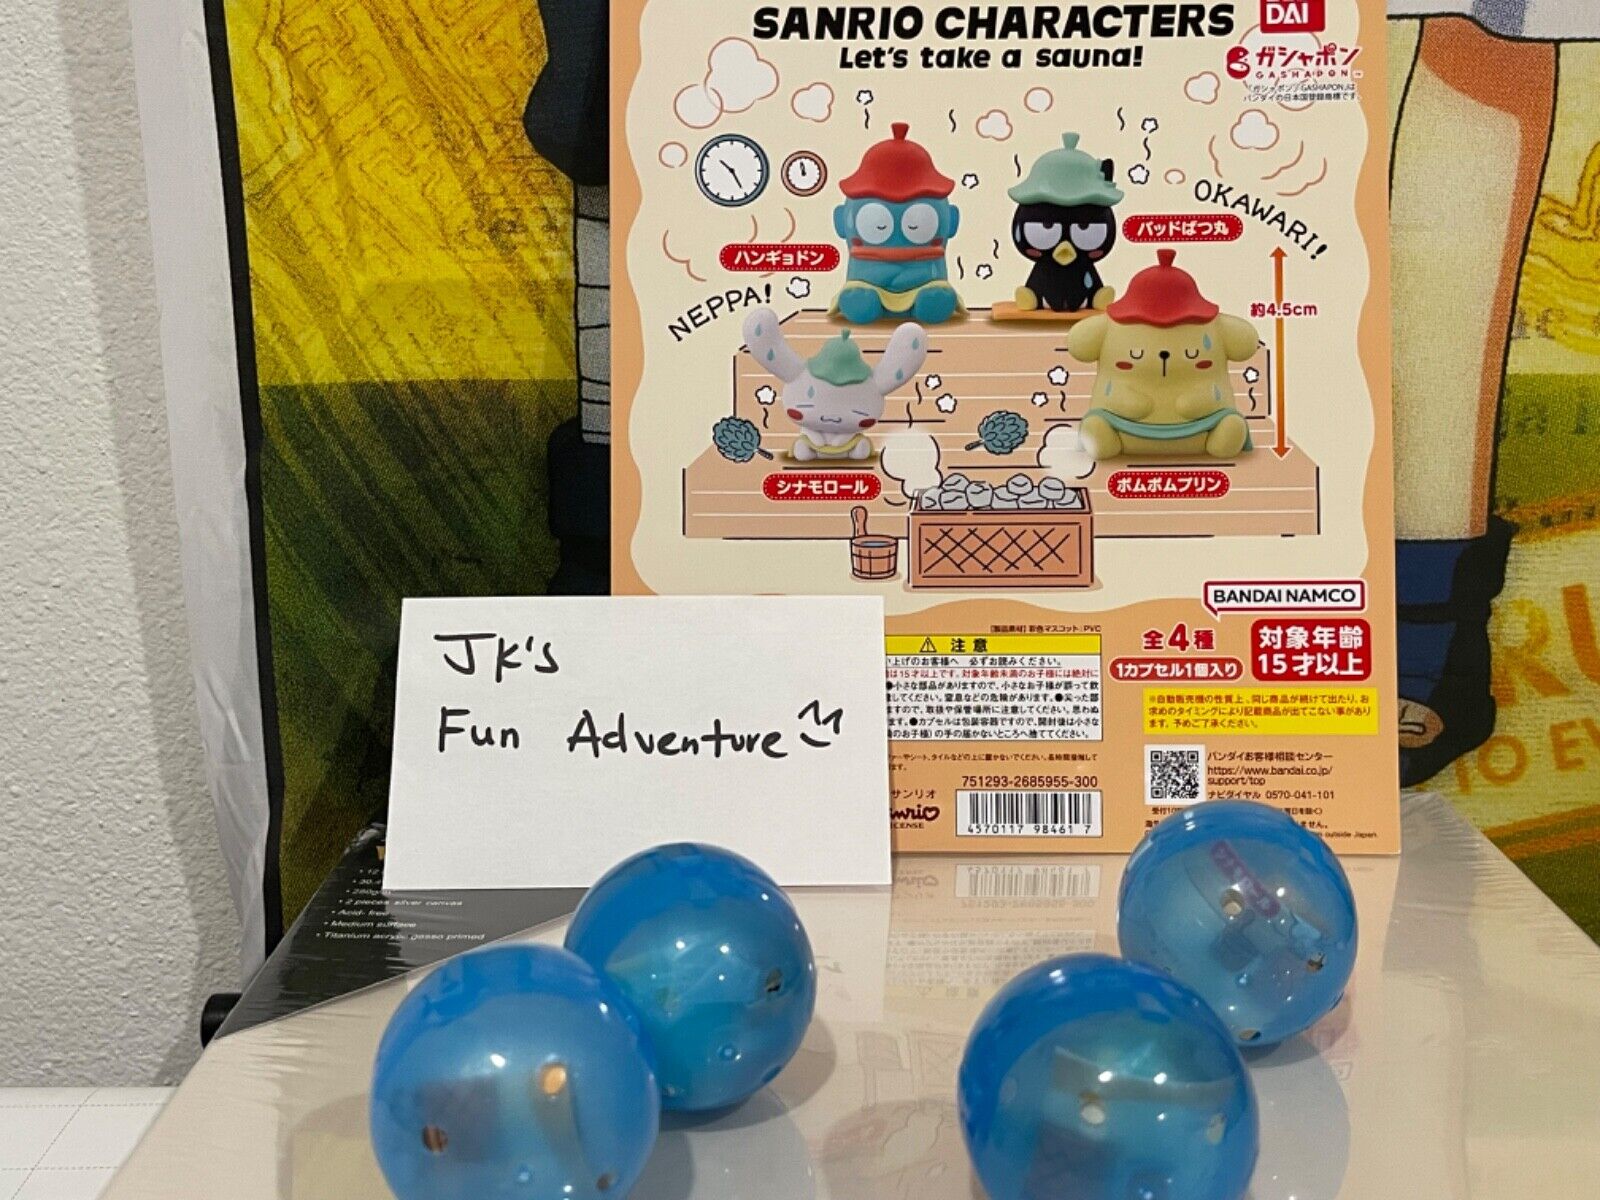 HK Hello Kitty TK Sanrio Gashapon/Gachapon Japanese toy capsule collectionSINGLE